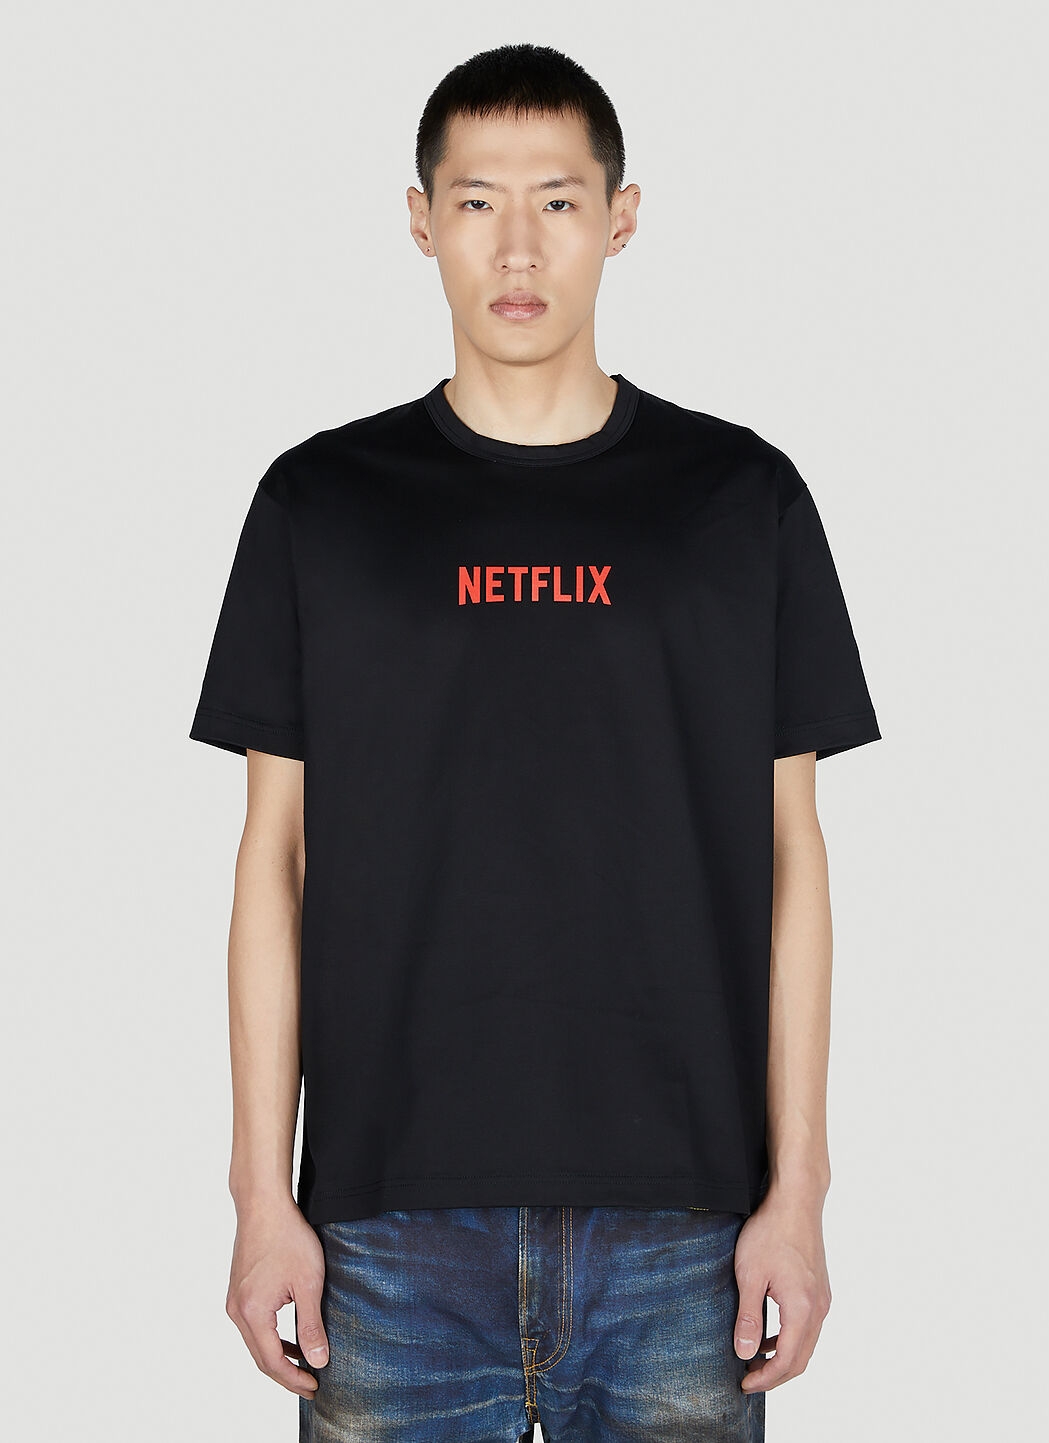 Junya Watanabe Netflix T-Shirt Black jwn0156010